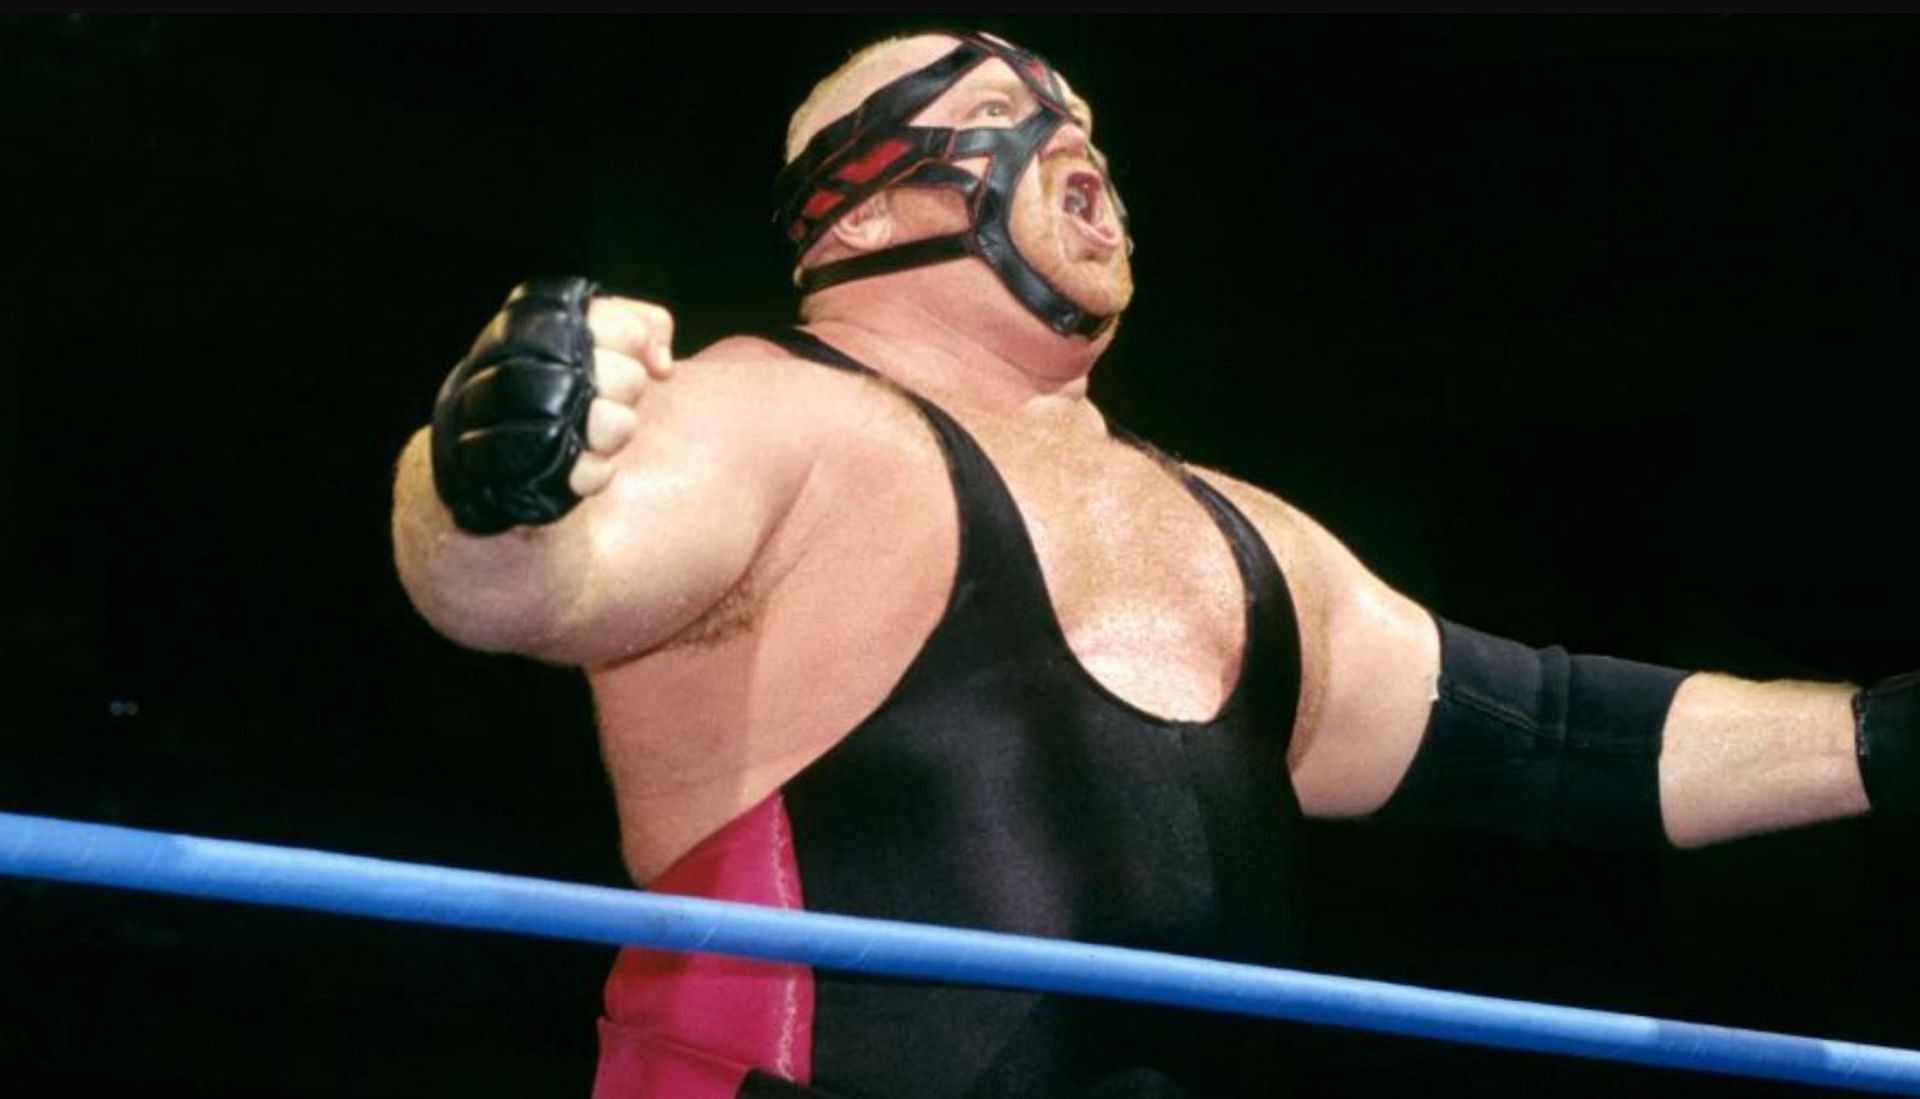 The Mastodon was a former three-time WCW World Heavyweight Champion